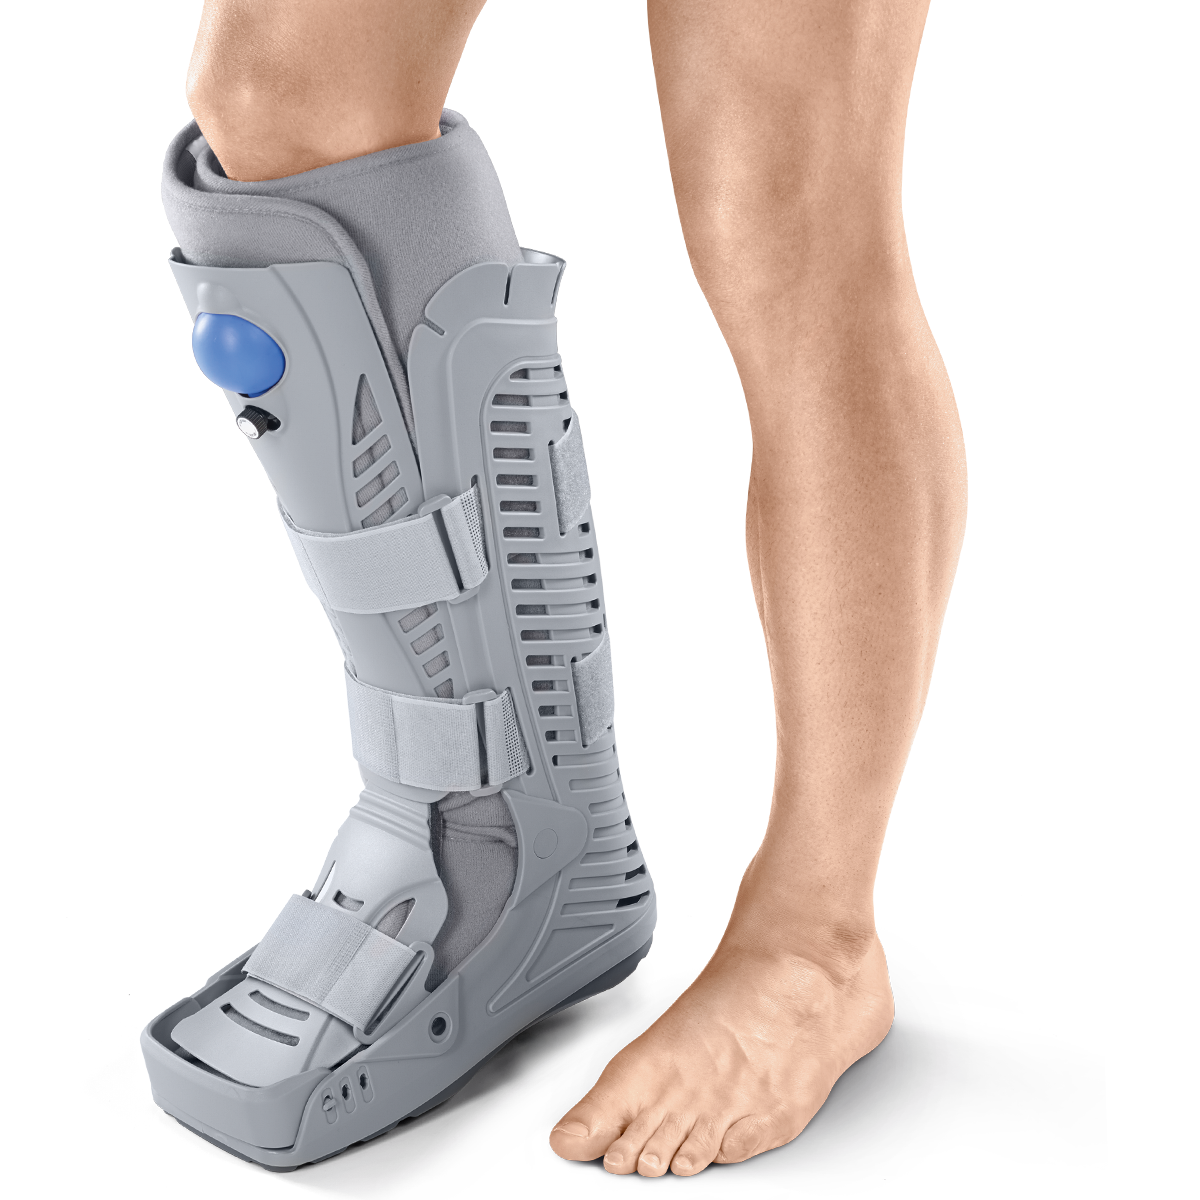 SP AIR WALKER- Lower Limb And Foot Brace